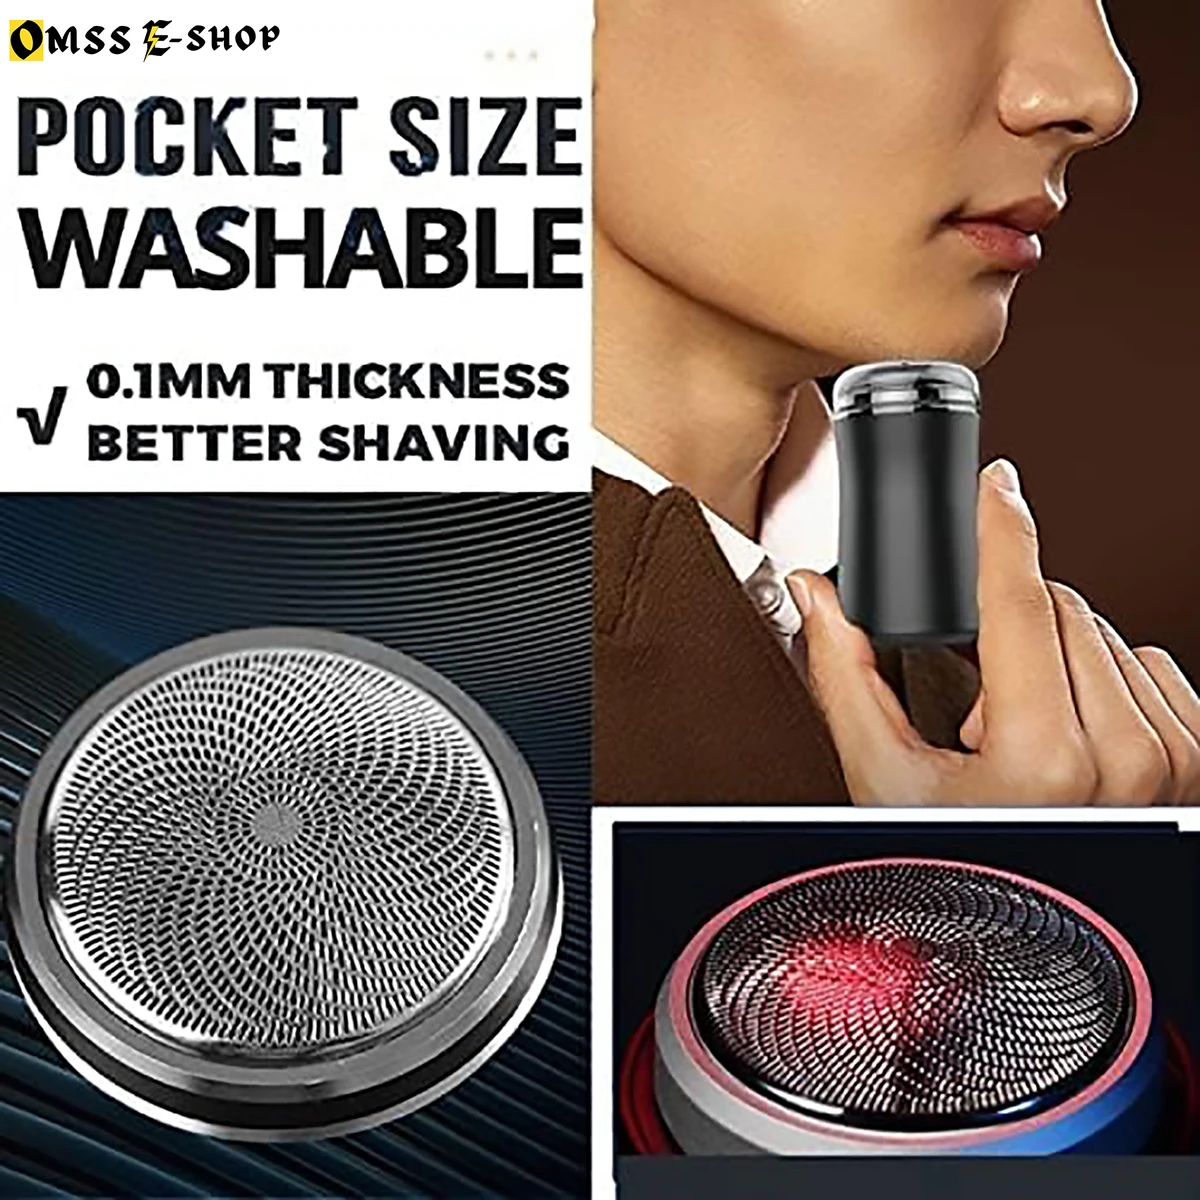 Portable Pocket Size Waterproof Electric Razor